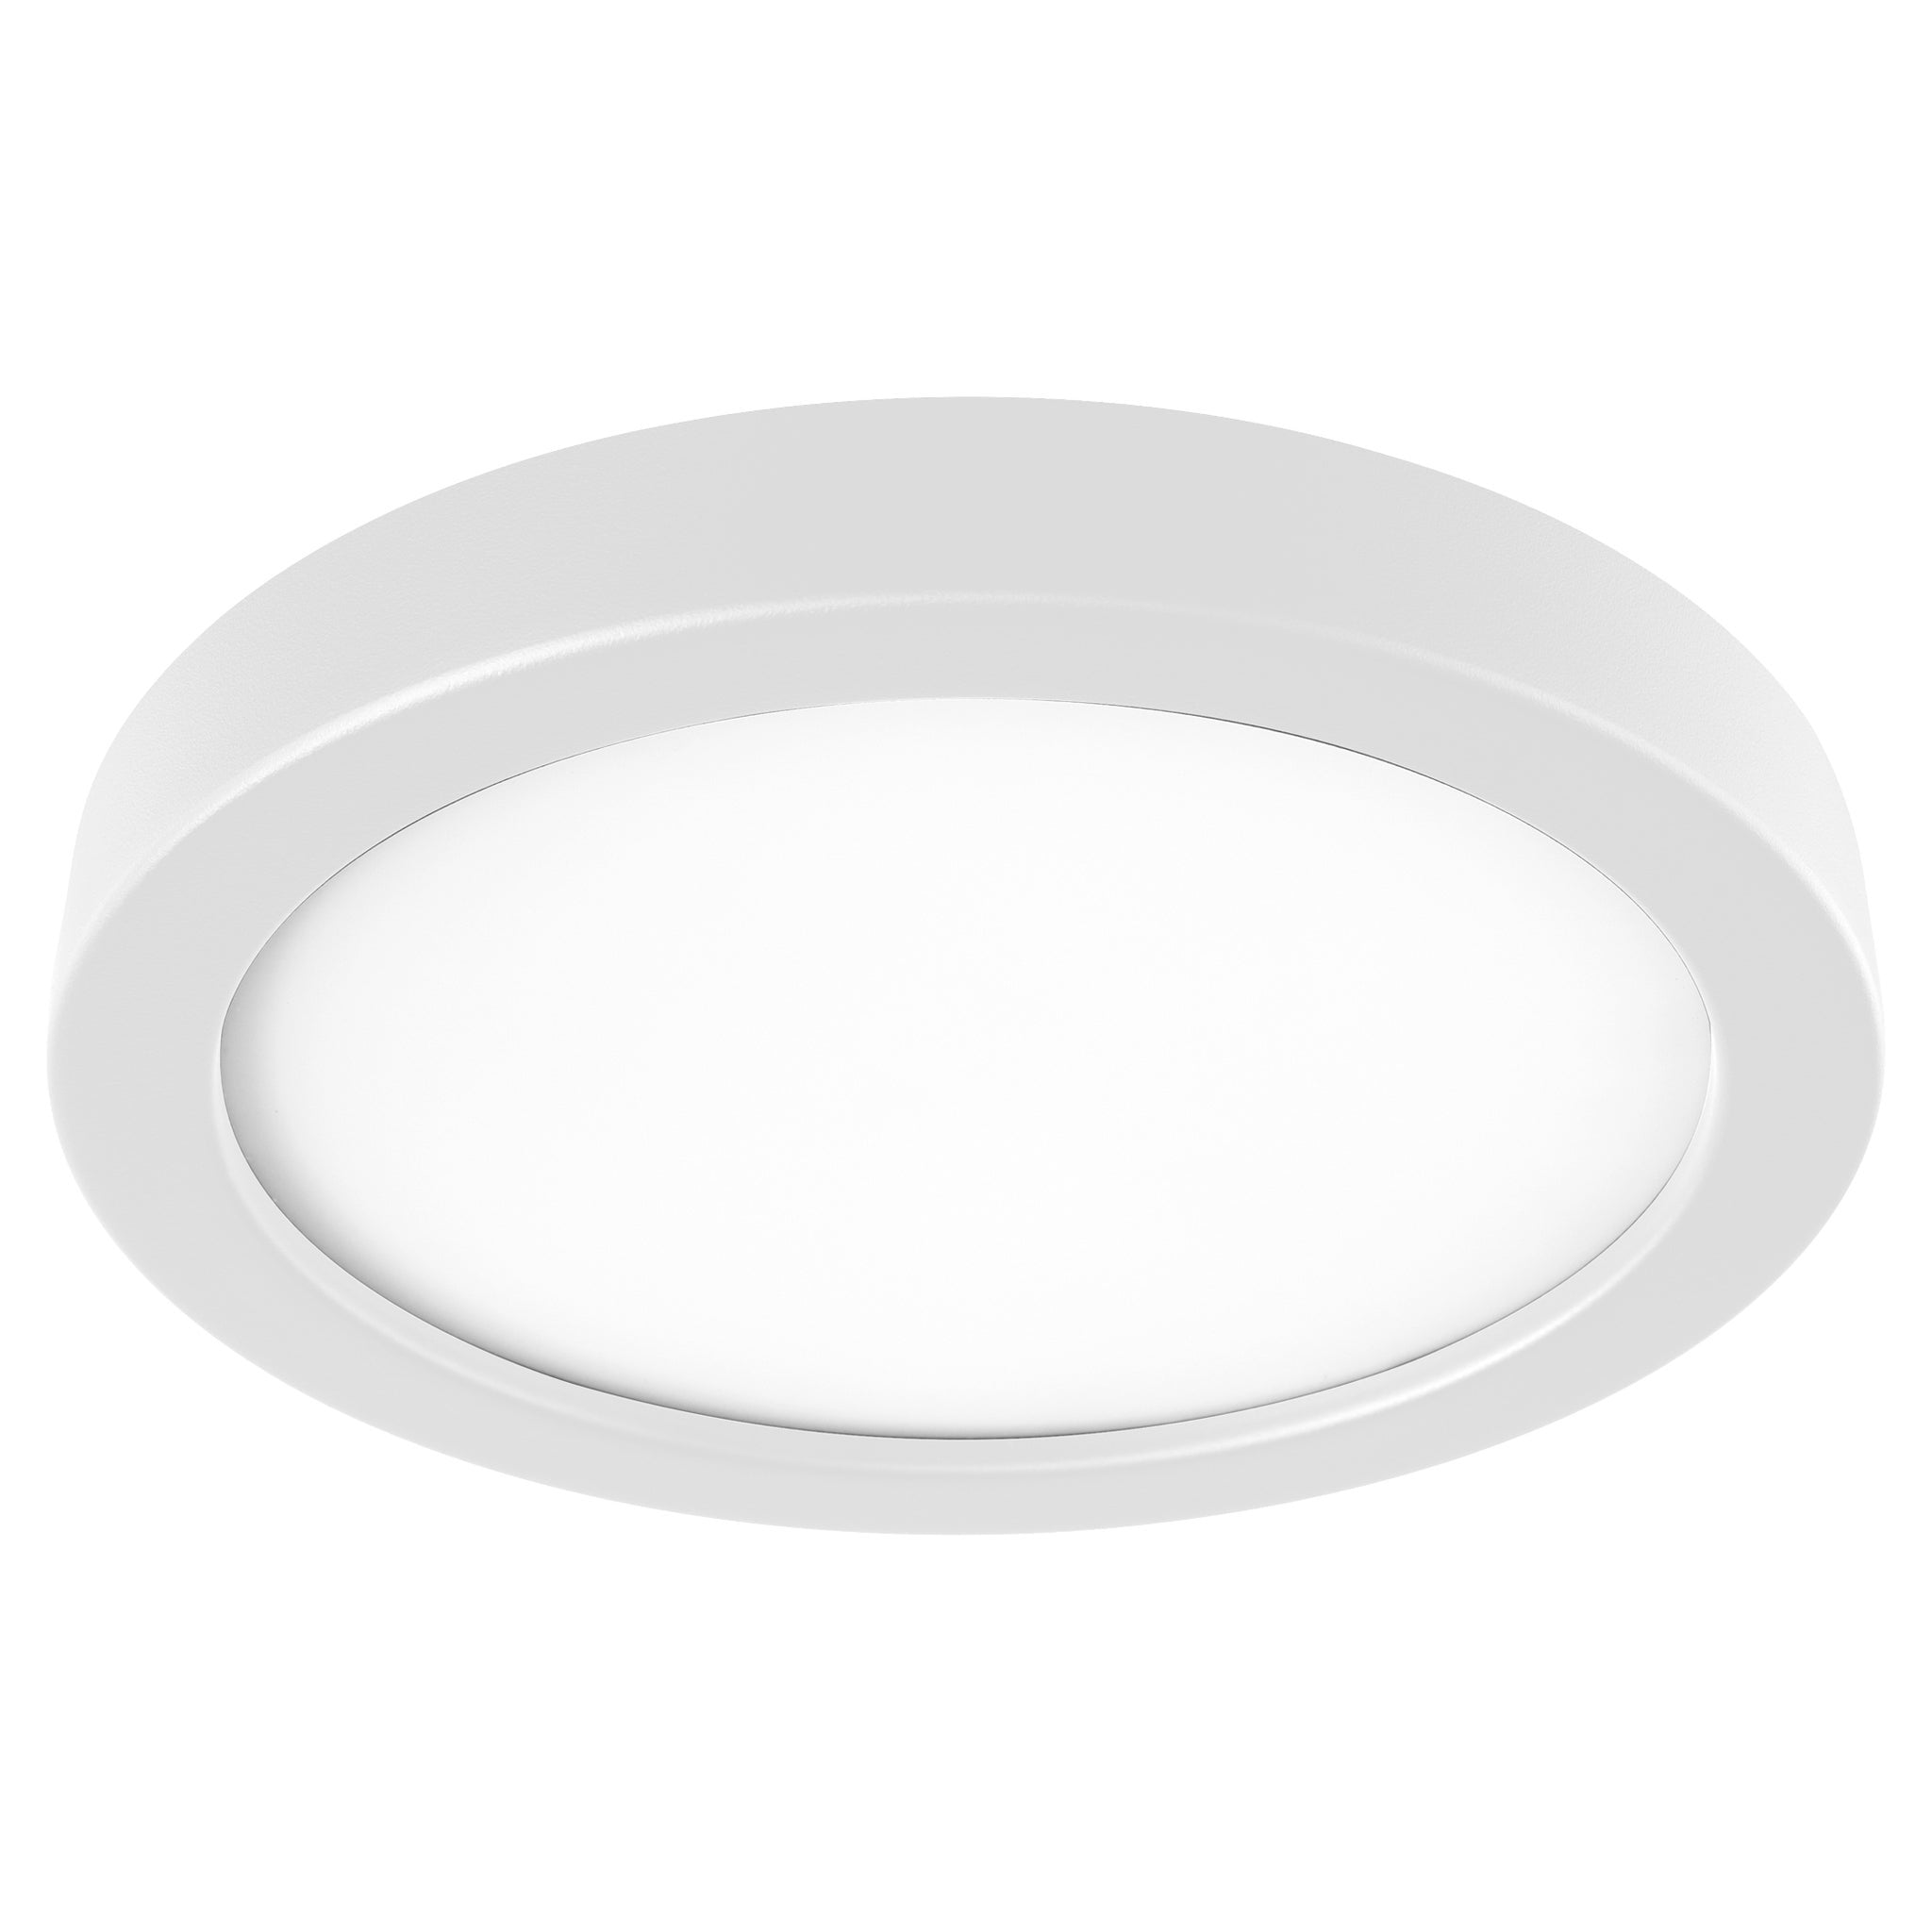 Oxygen ADORA Fan LED Light Kit – Black, White or Satin Nickel